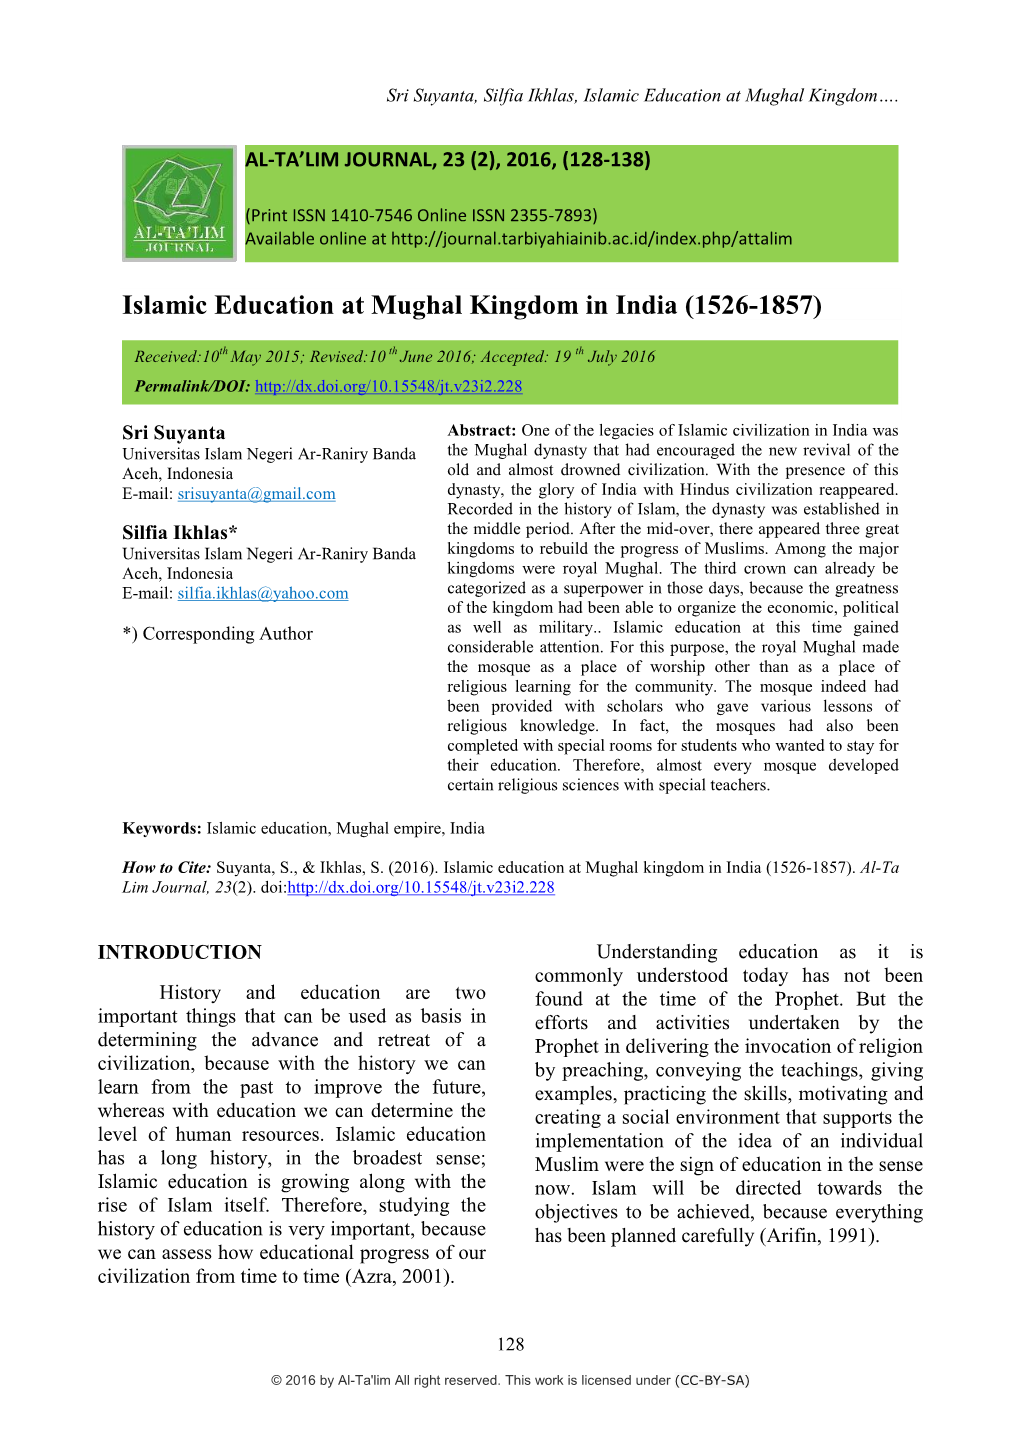 Islamic Education at Mughal Kingdom in India (1526-1857)